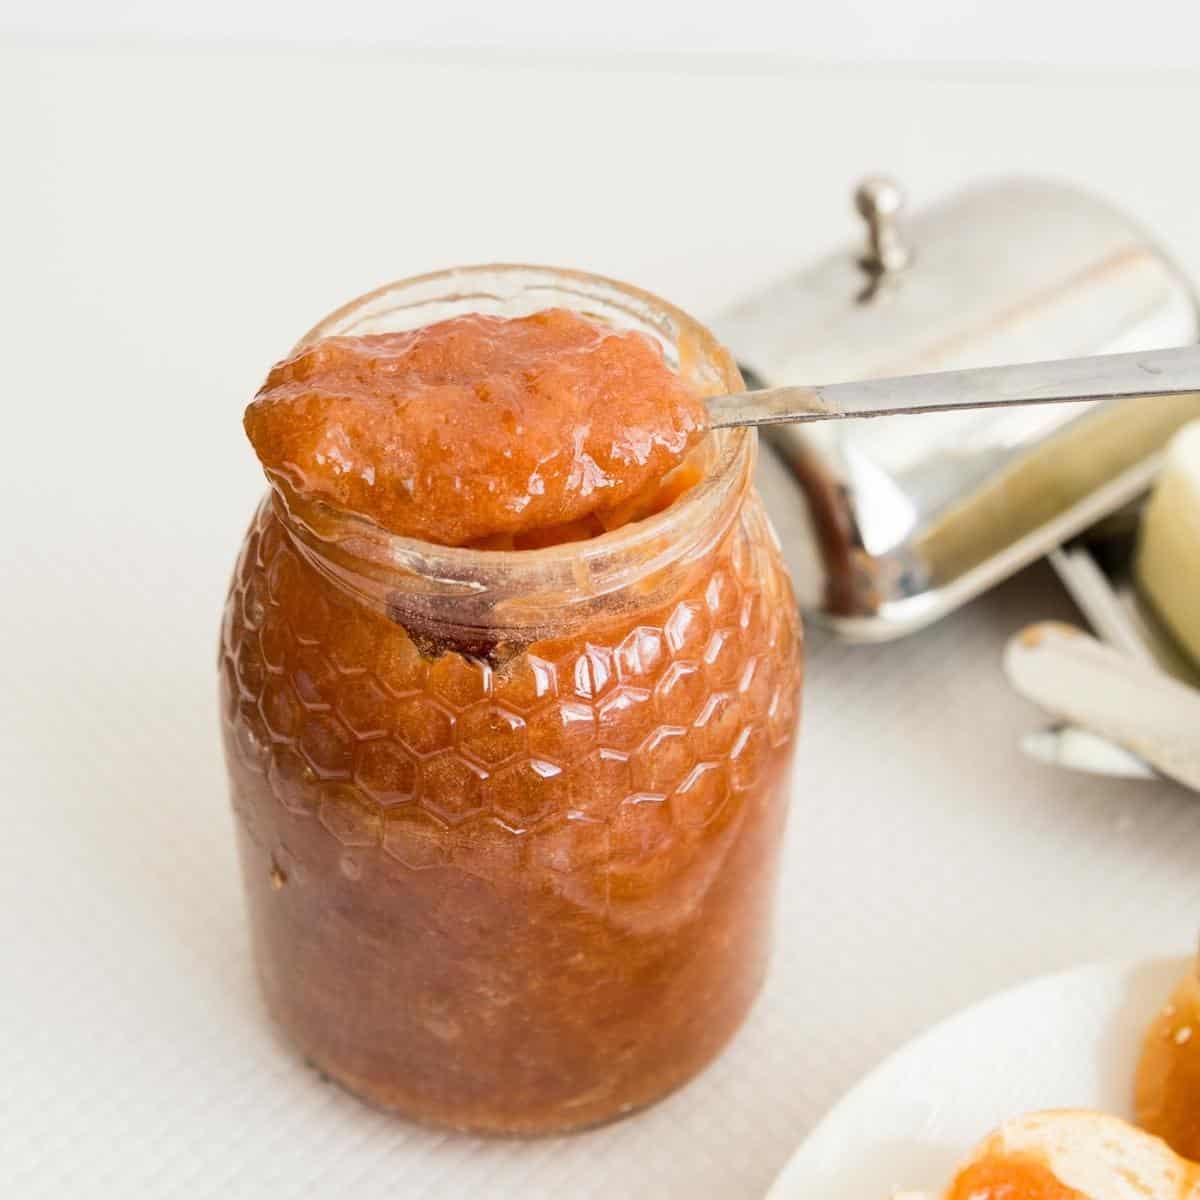 A jar and spoon with jam - peach plums.